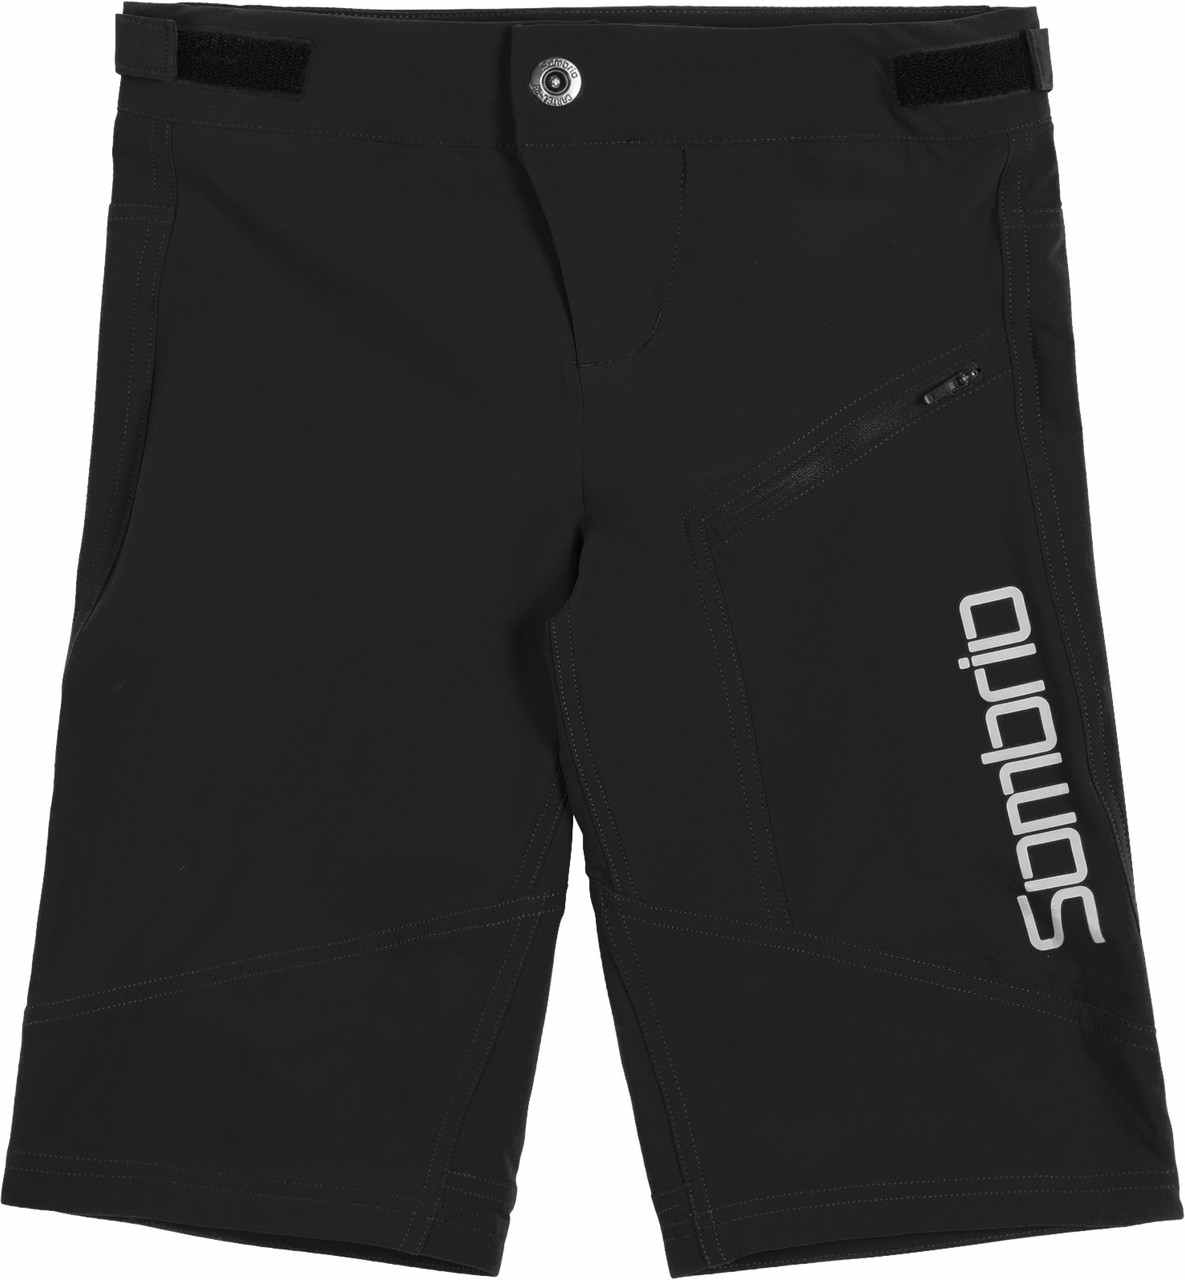 Grom's Rebel Shorts Black